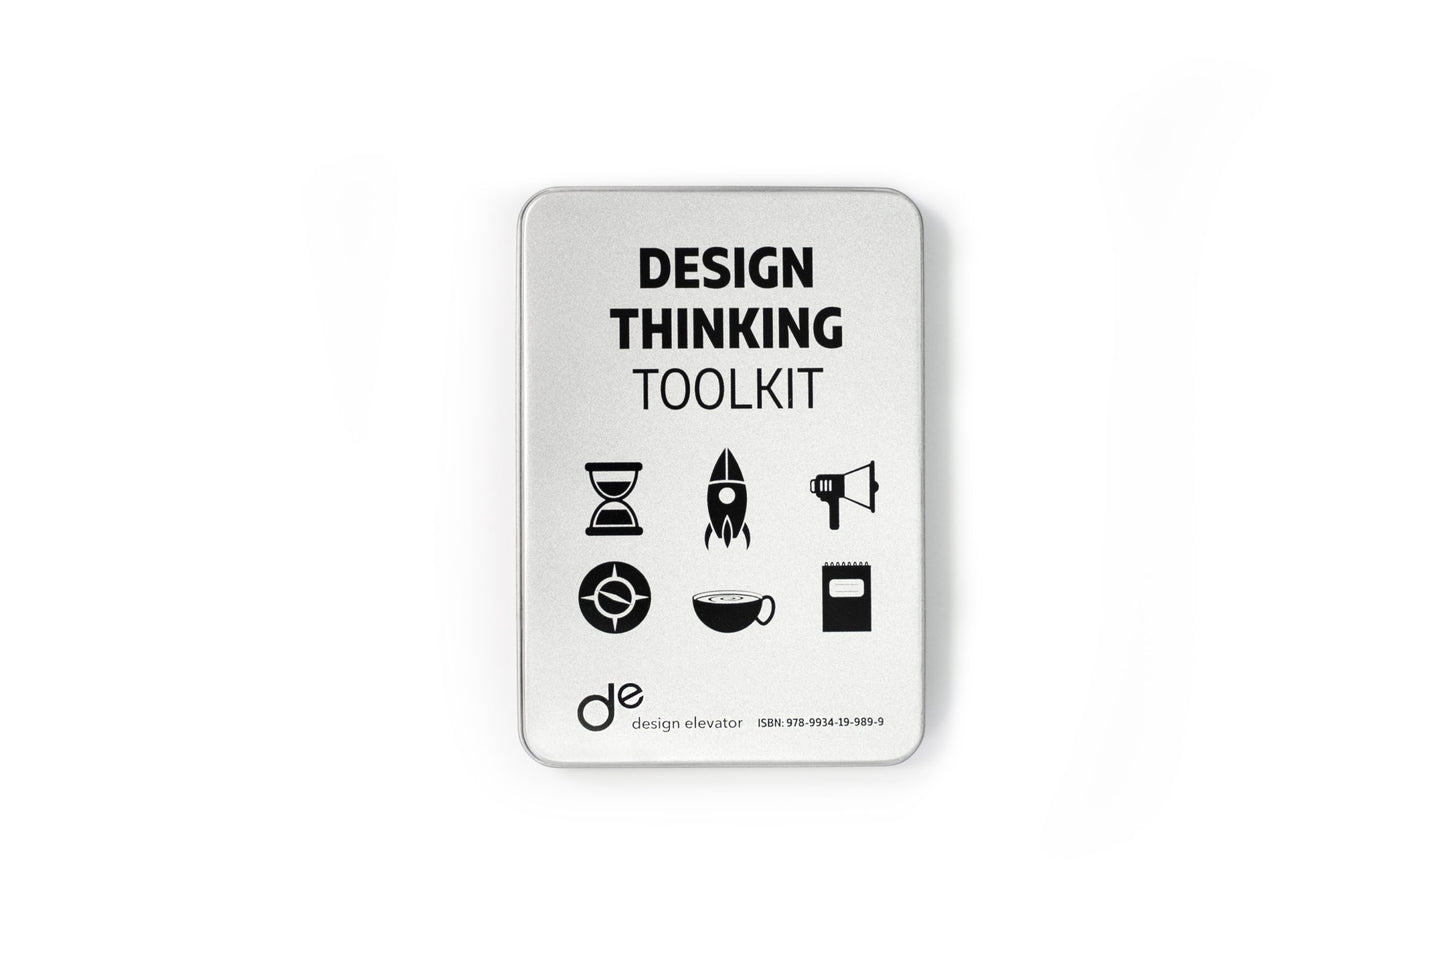 Design thinking toolkit